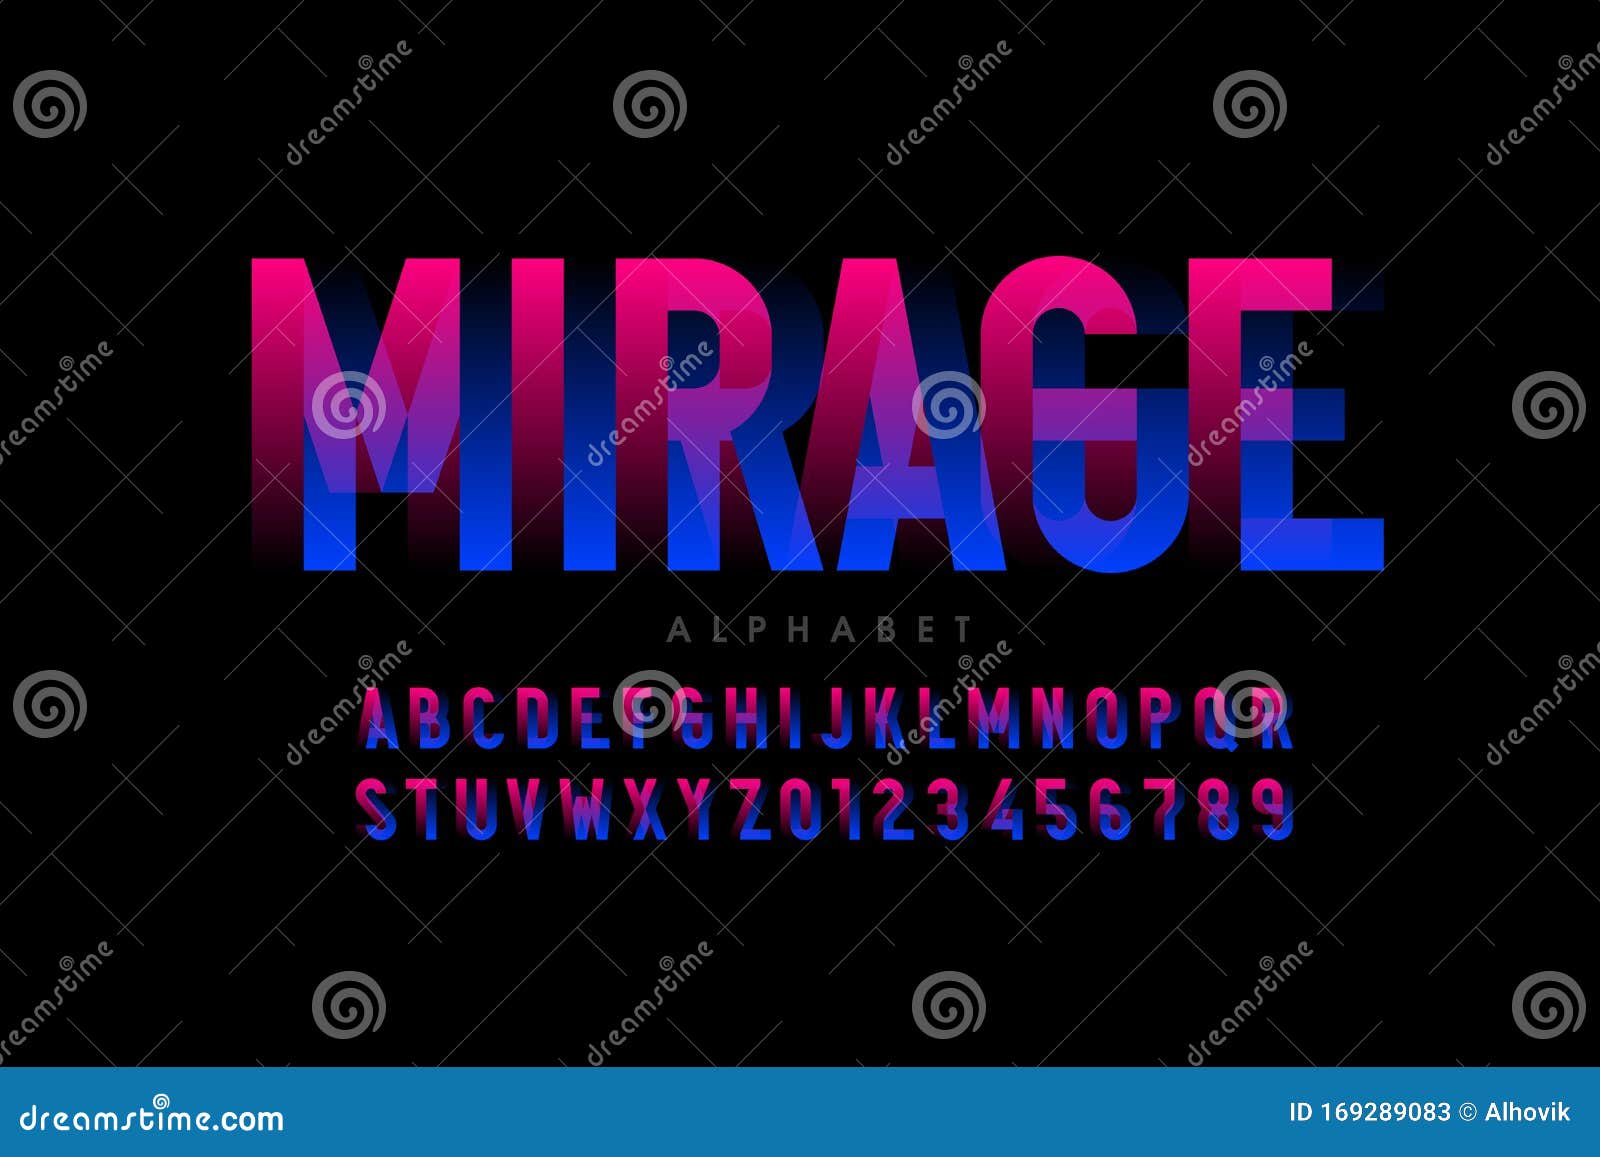 modern optical illusion style font